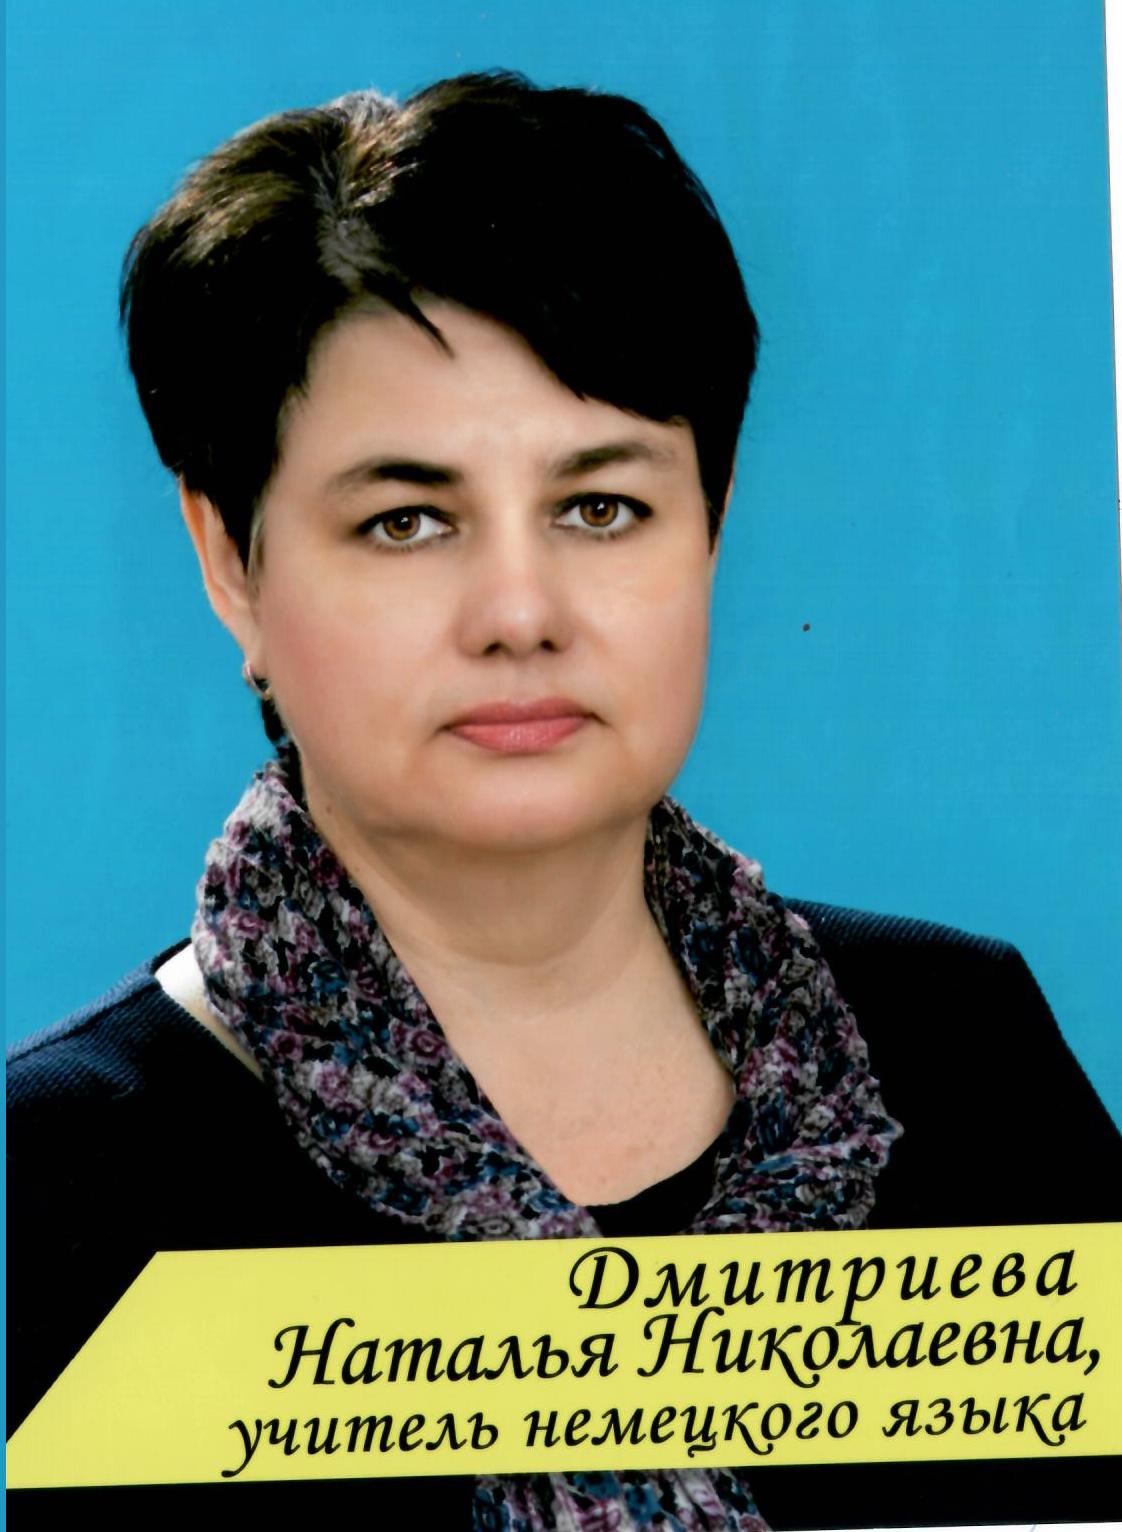 Дмитриева Наталья Николаевна.